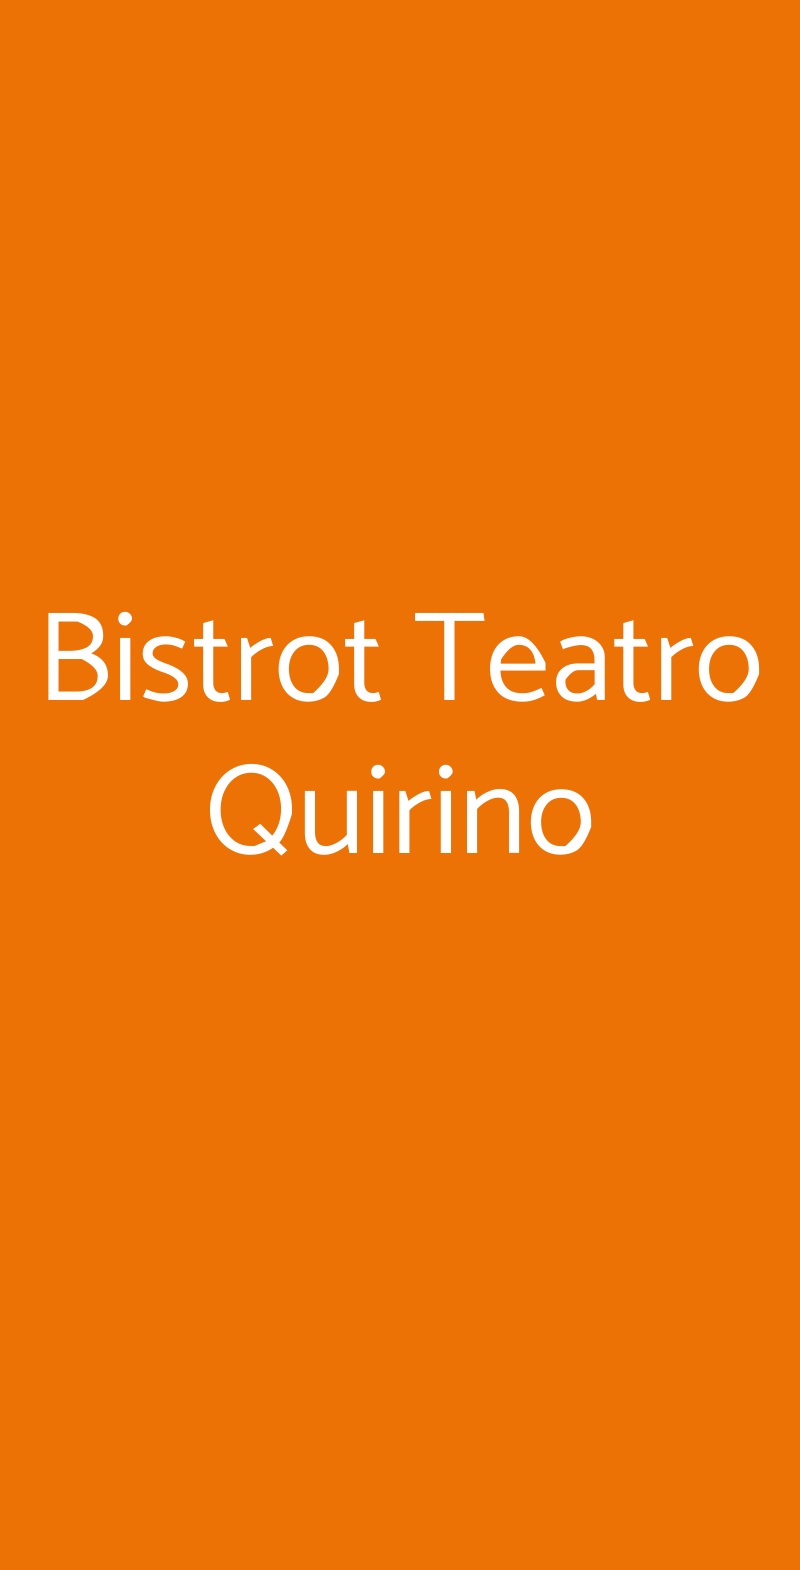 Bistrot Teatro Quirino Roma menù 1 pagina